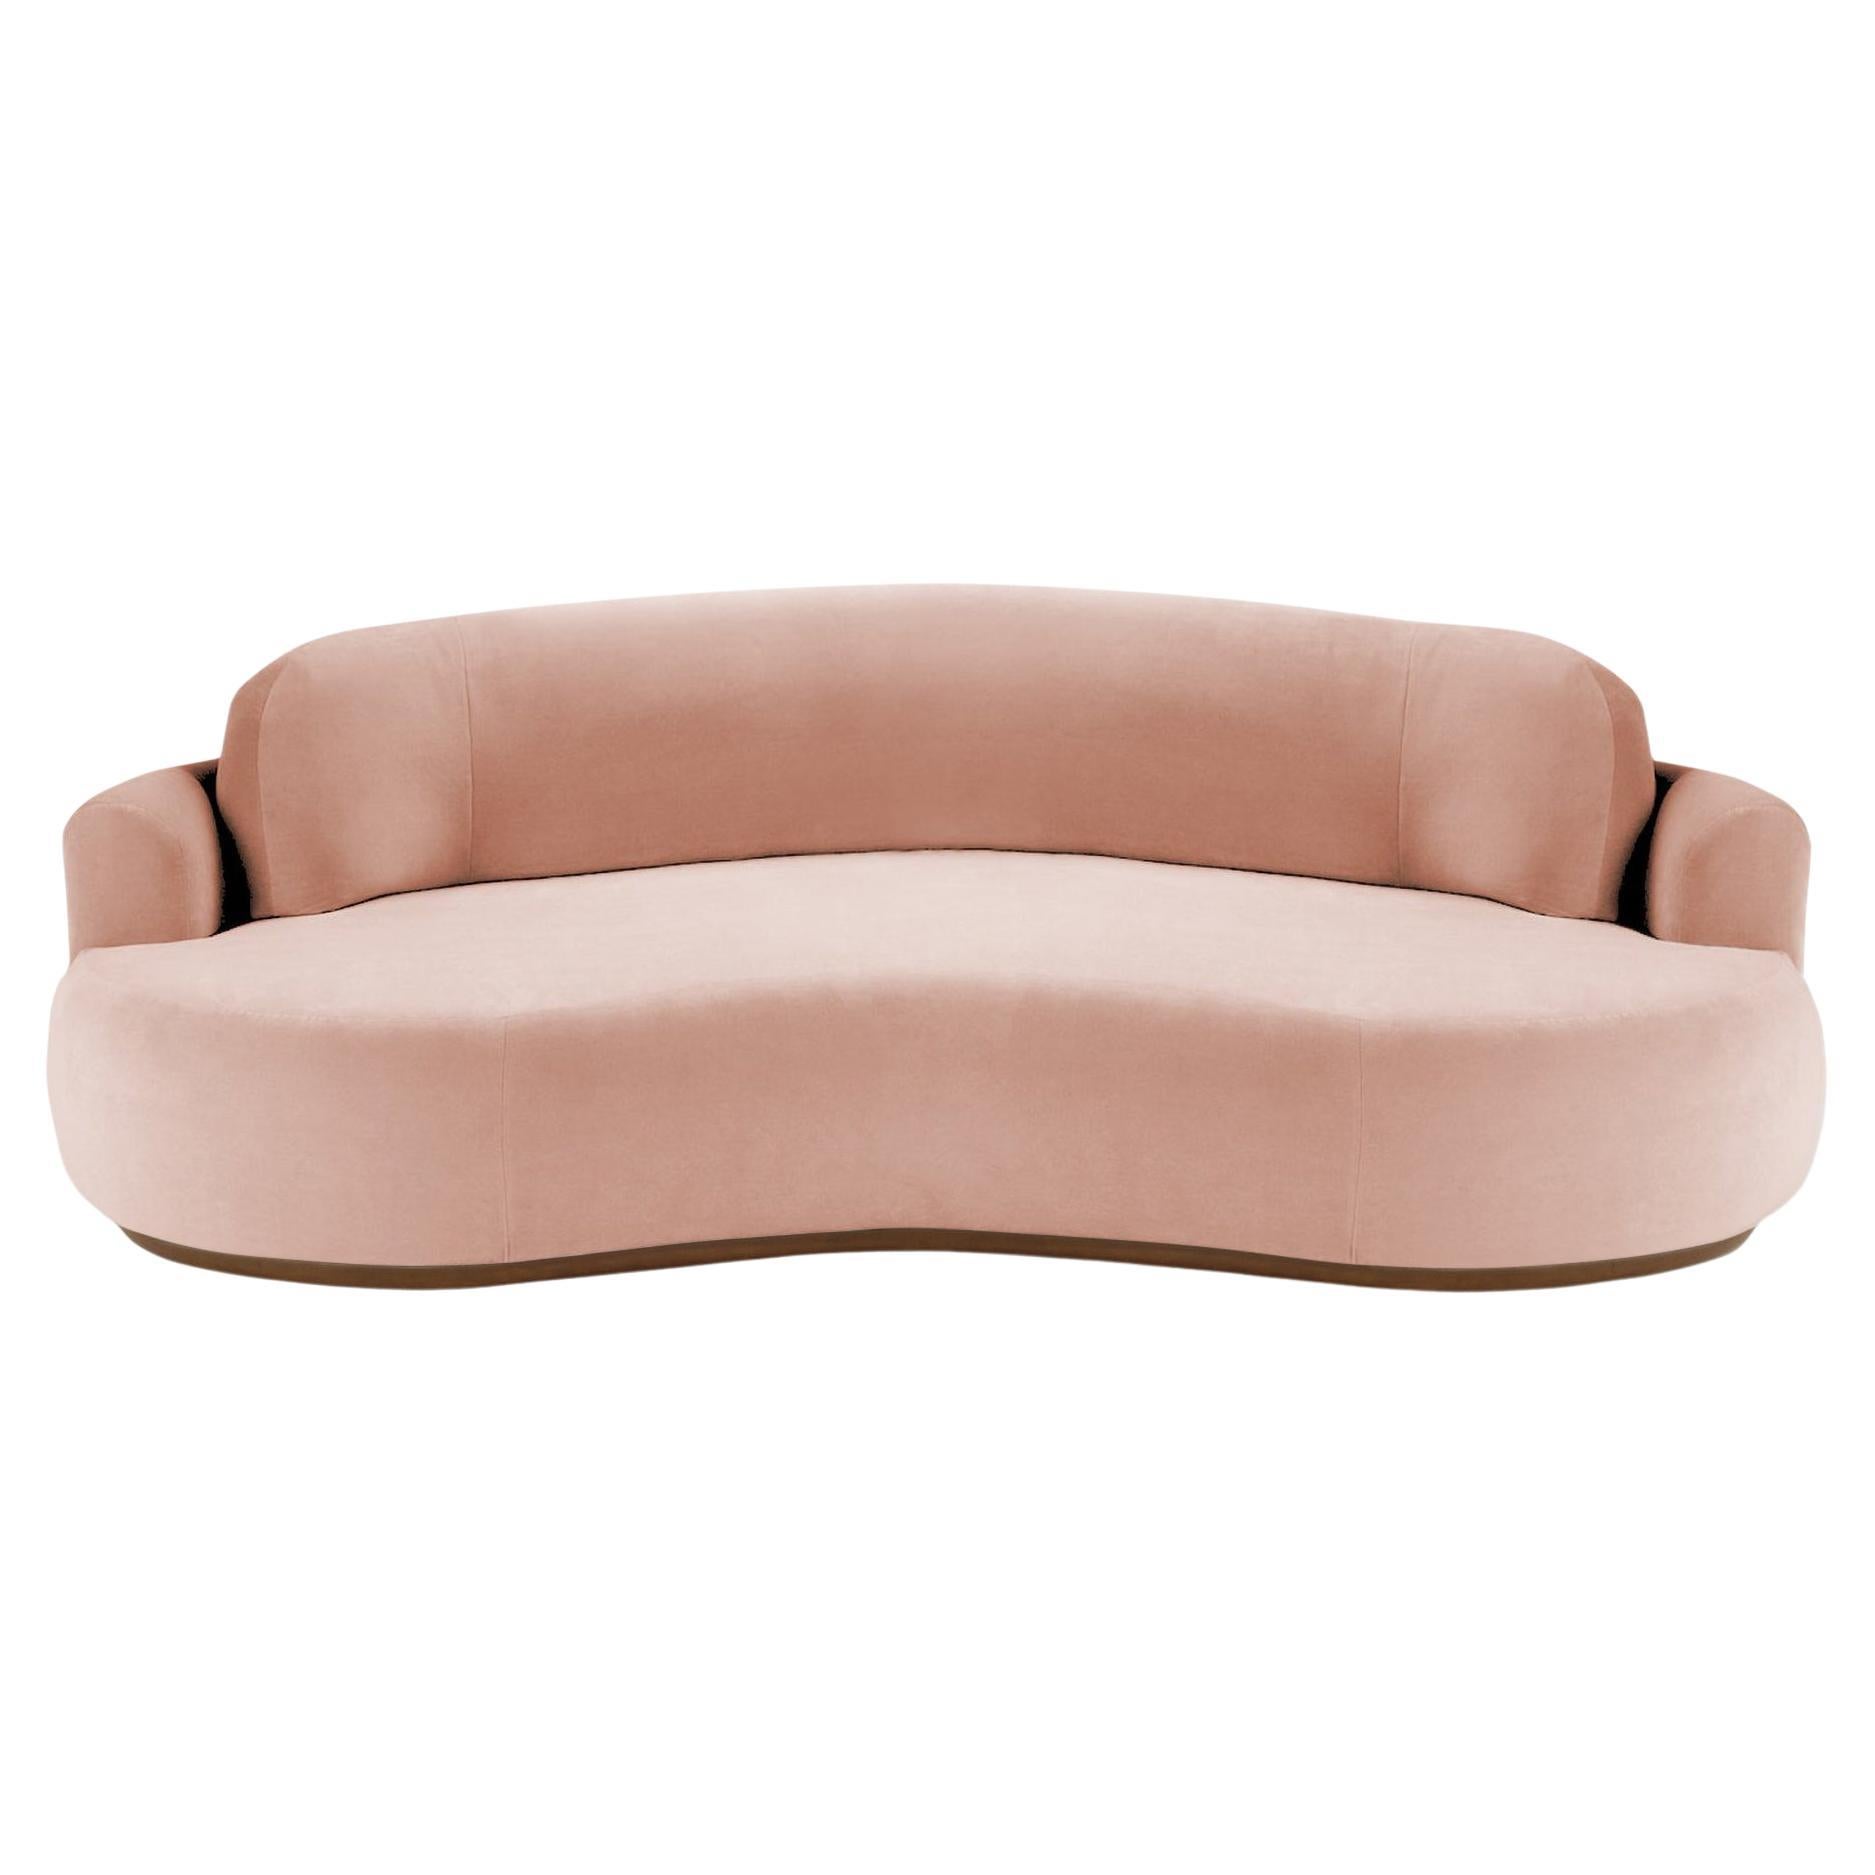 Naked Curved Sofa, Small with Beech Ash-056-1 and Vigo Blossom